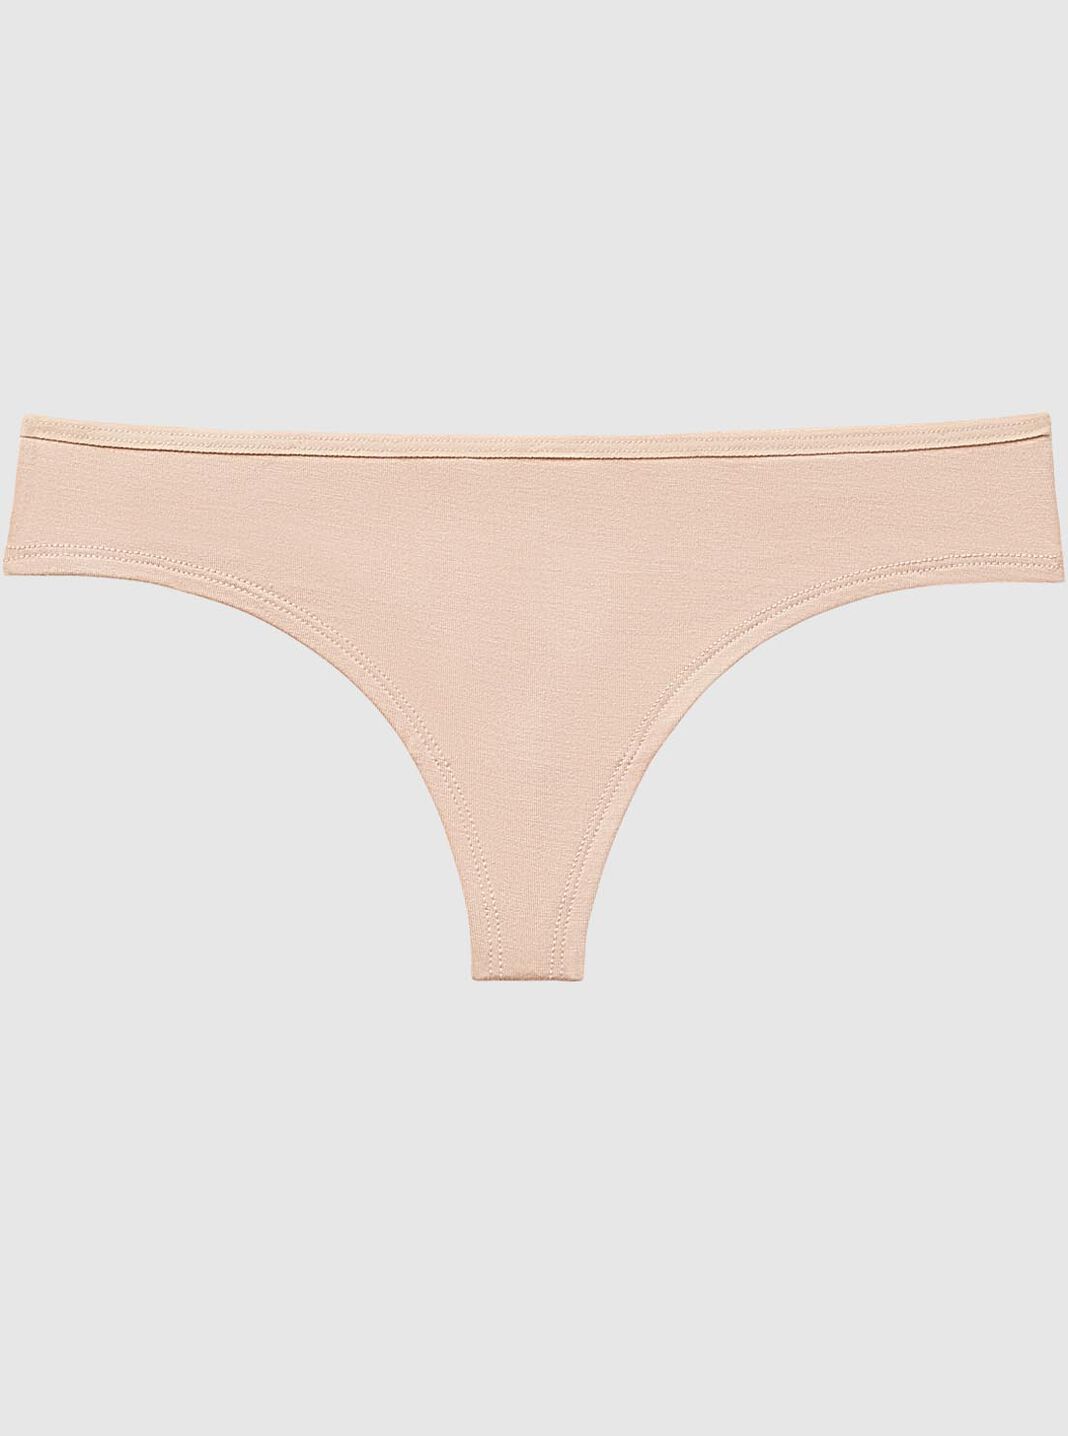 Puntoco Plus Size Clearance Briefs,Women'S Lingerie Seamless Briefs Lace  Panties Thong Underwear Beige 